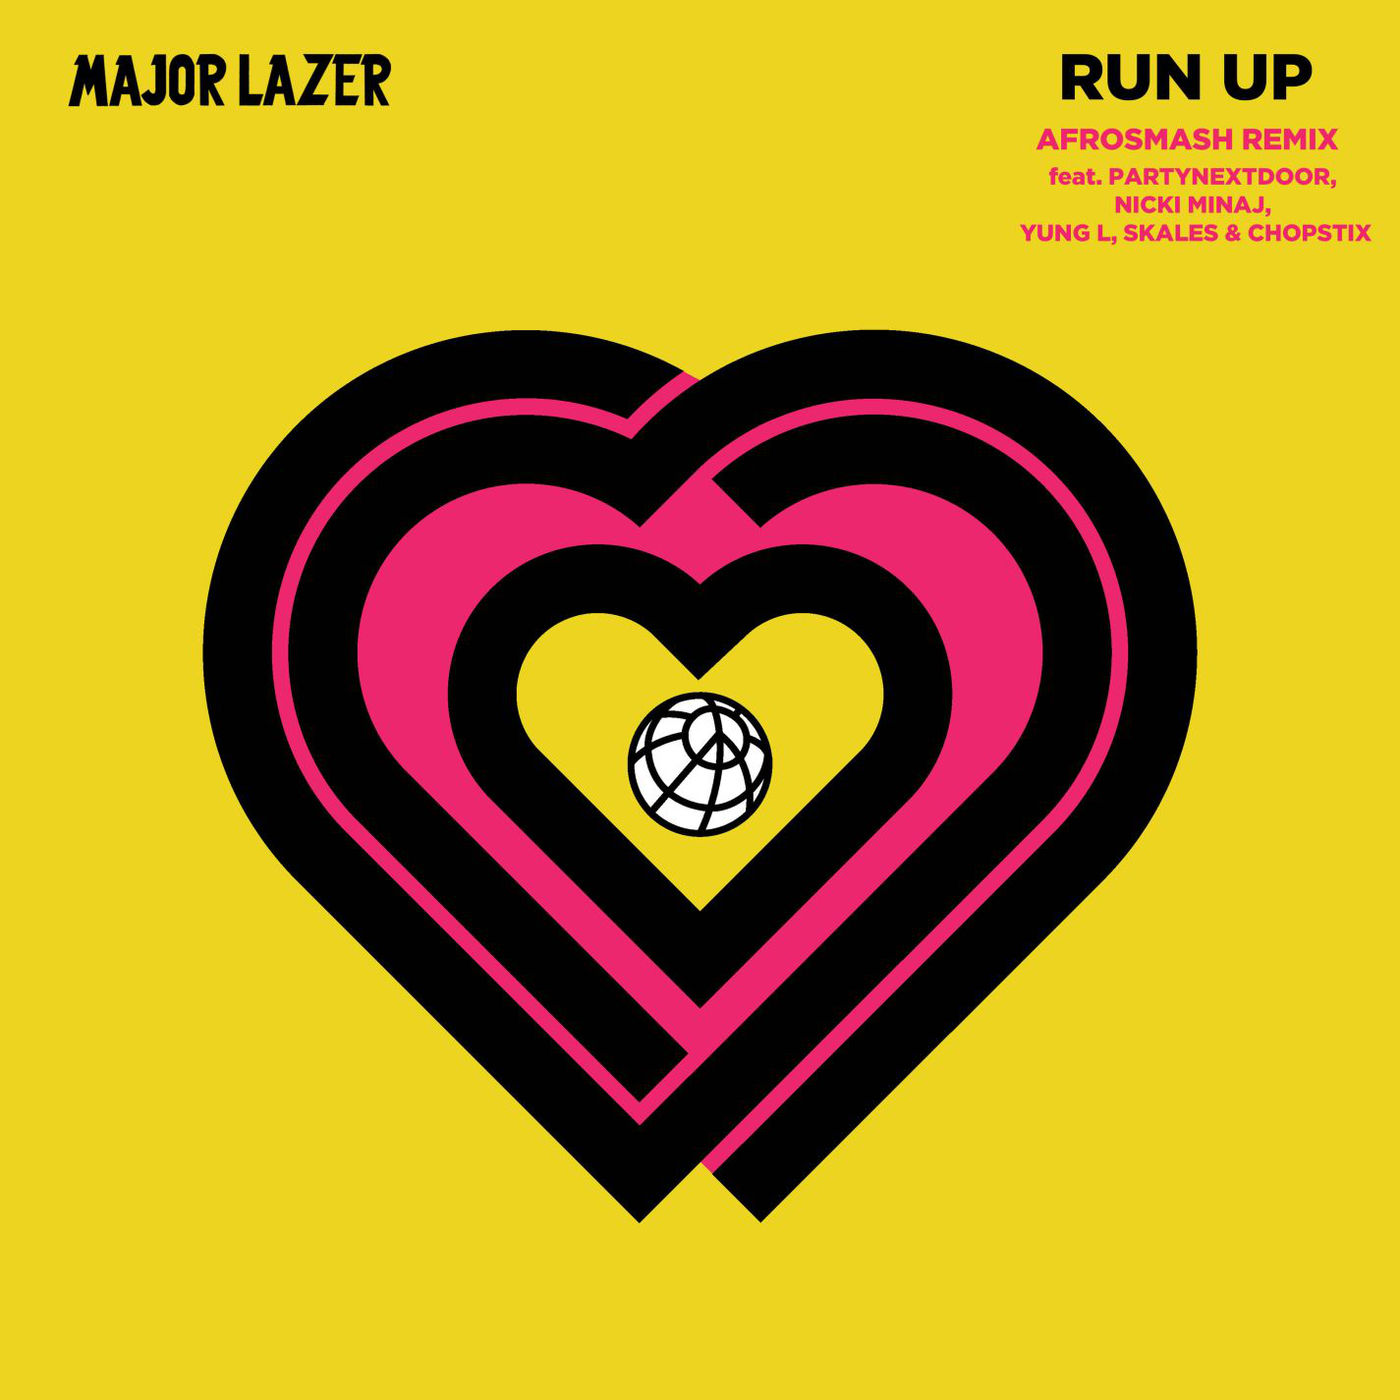 Major Lazer Ft. PARTYNEXTDOOR, Nicki Minaj, Yung L, Skales & Chopstix - Run Up (Afrosmash Remix)